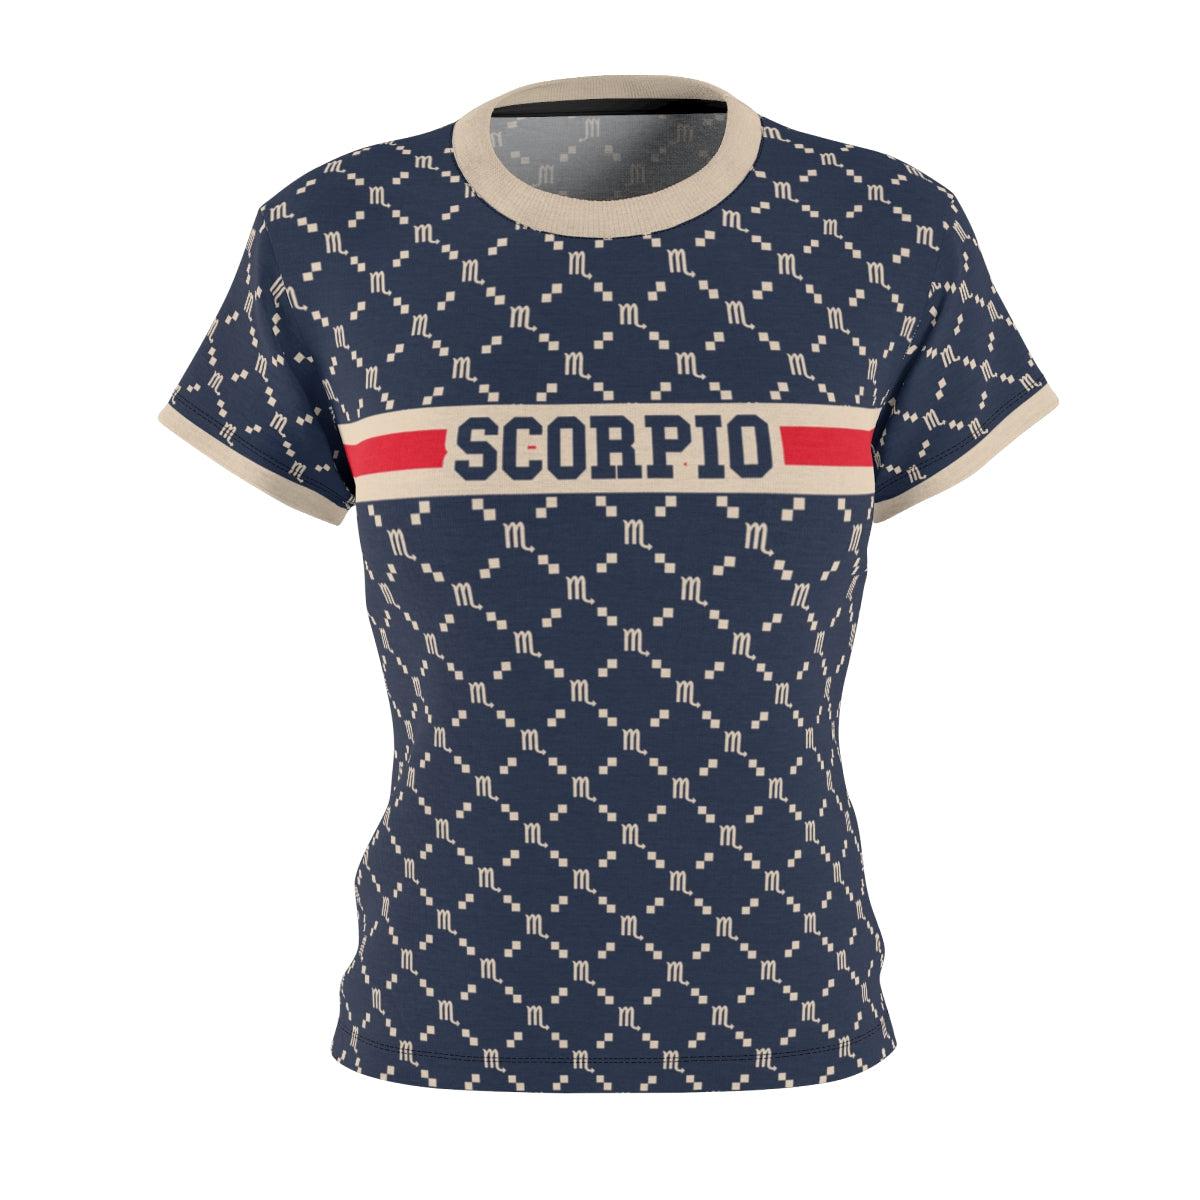 Scorpio G-Style Shirt - Blue